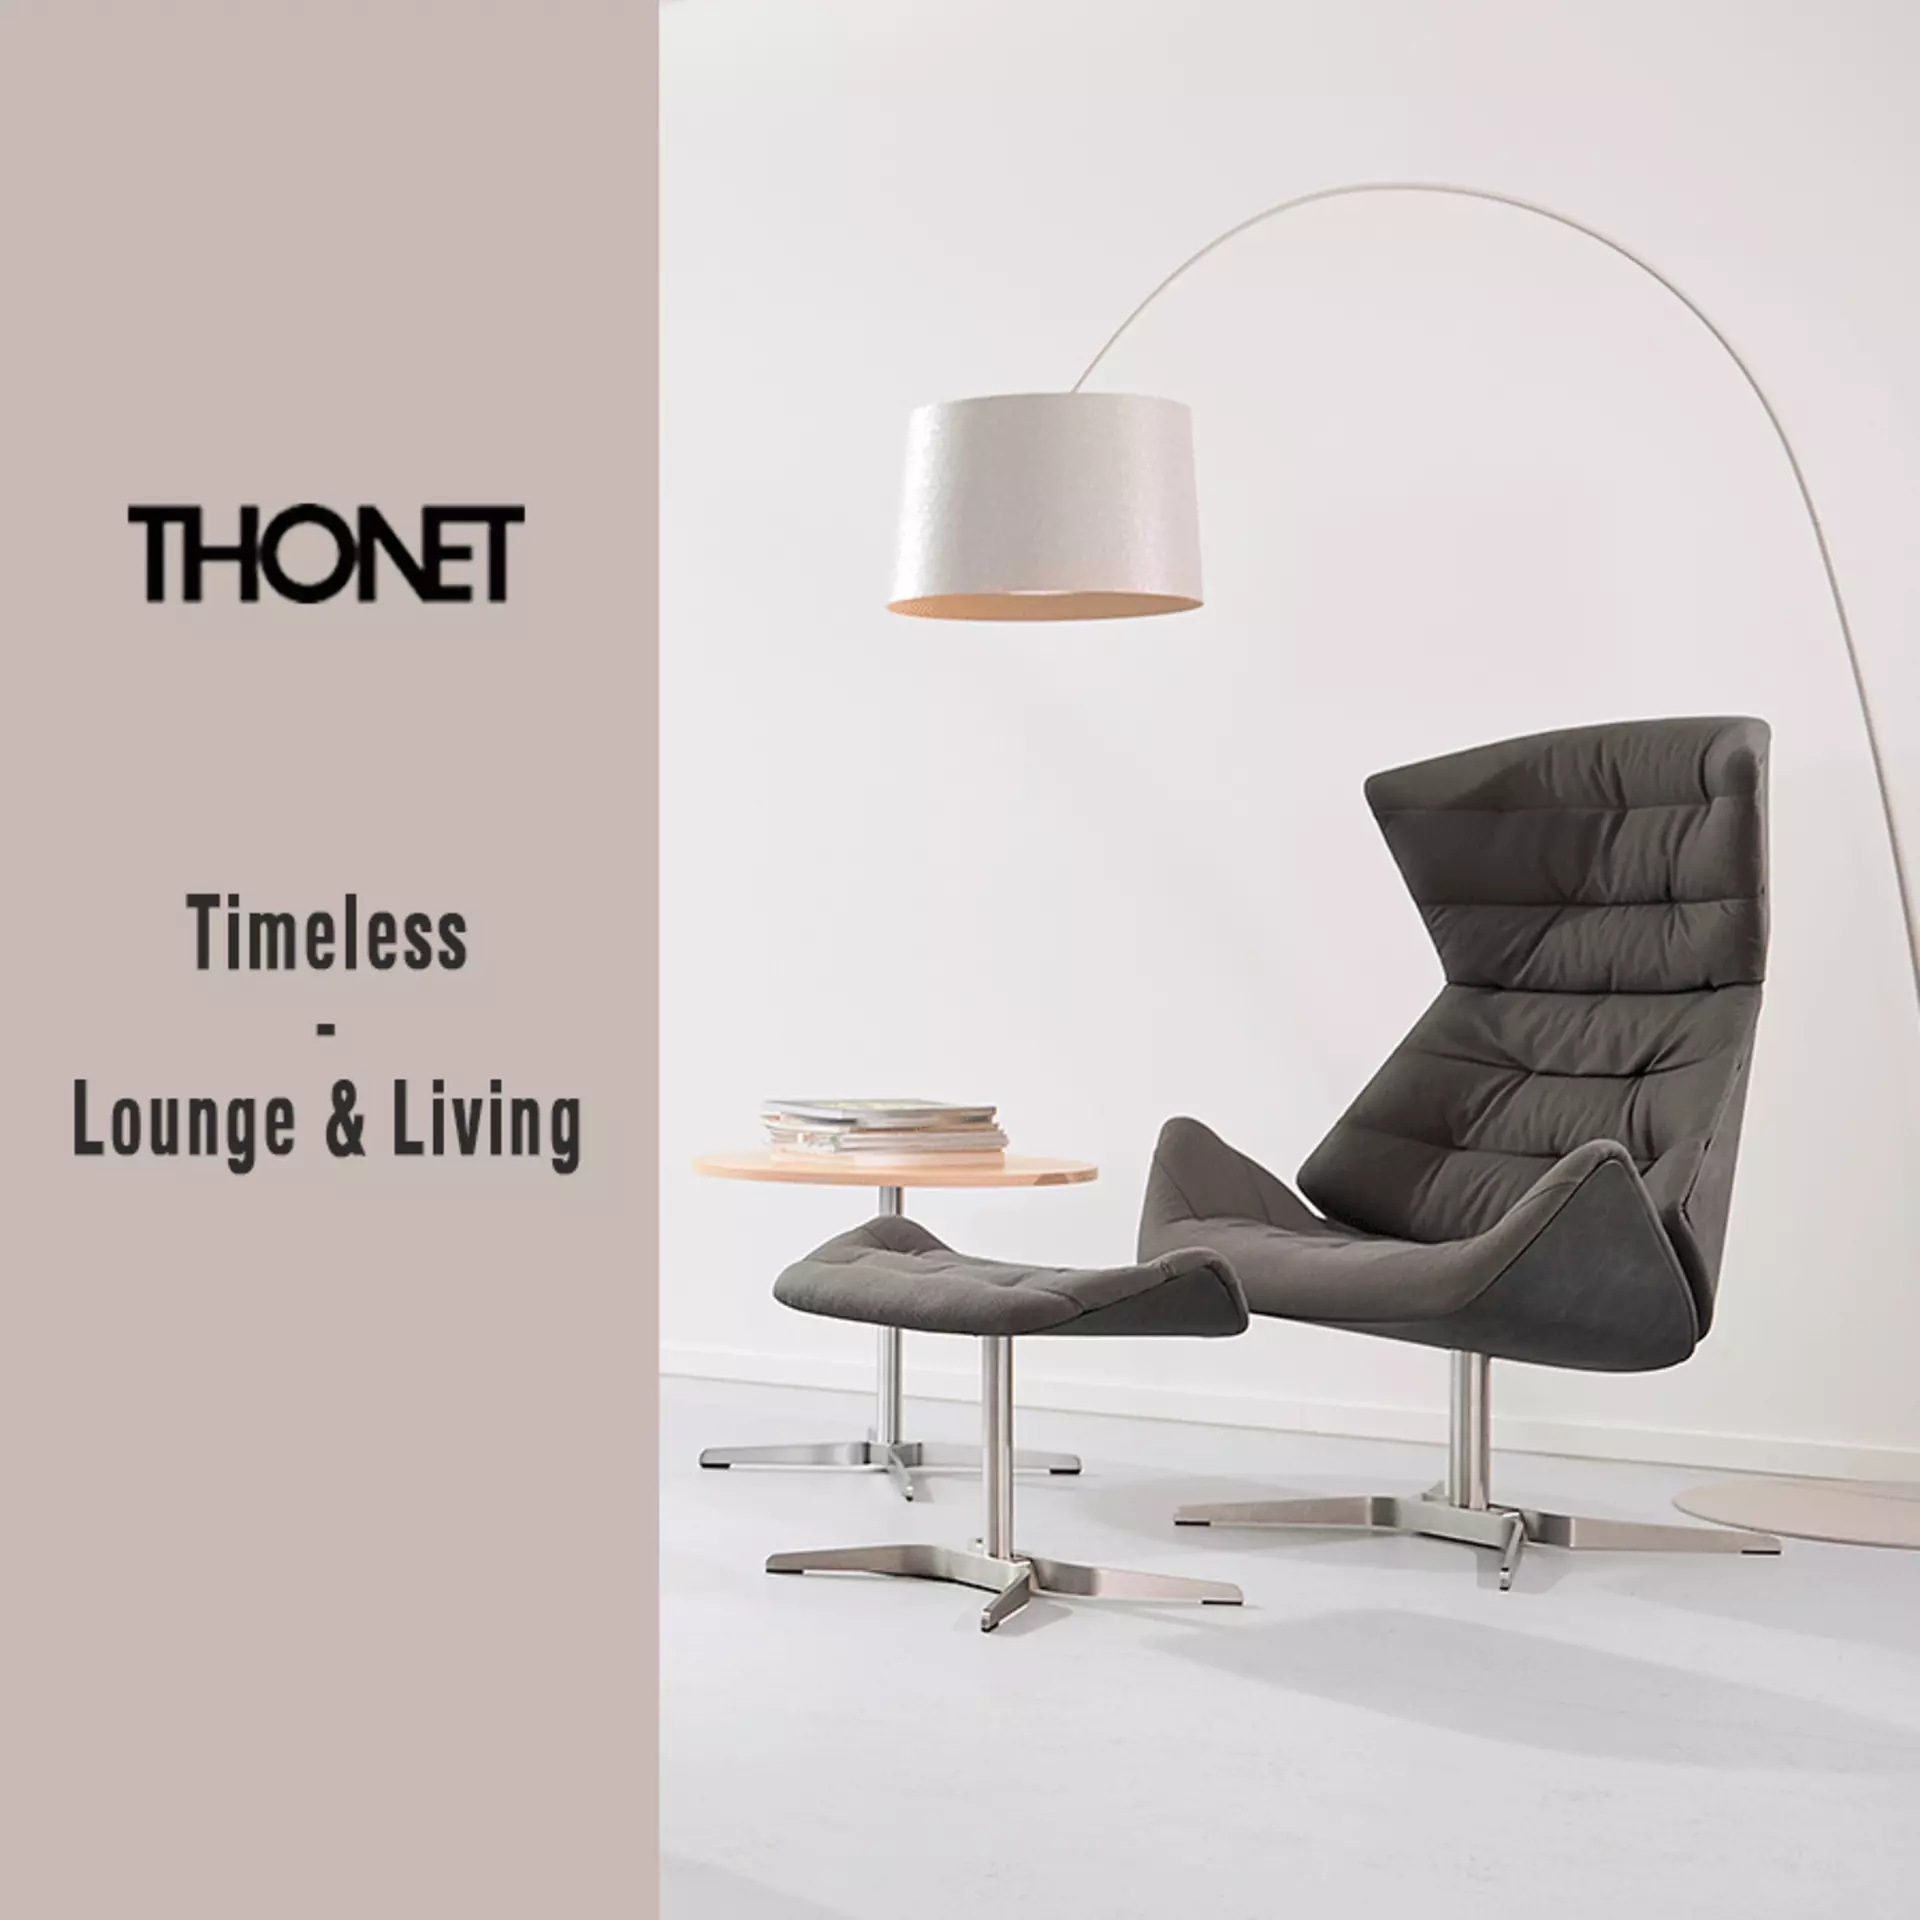 Thonet Timeless Lounge & Living - Jetzt zur attraktiven Aktion